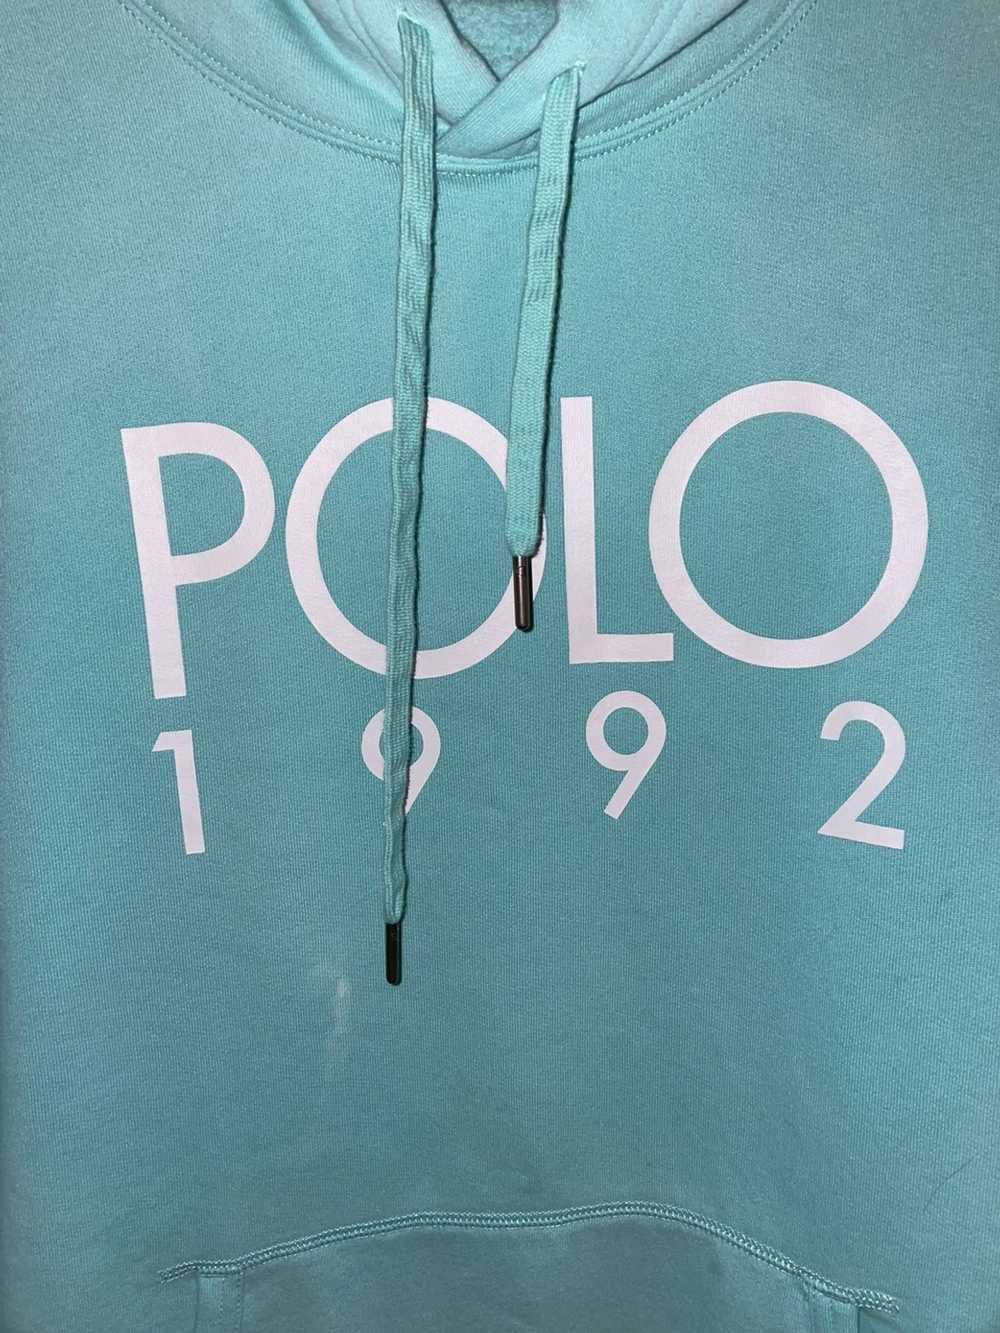 Polo Ralph Lauren Polo 1992 oversize hoodie - image 2